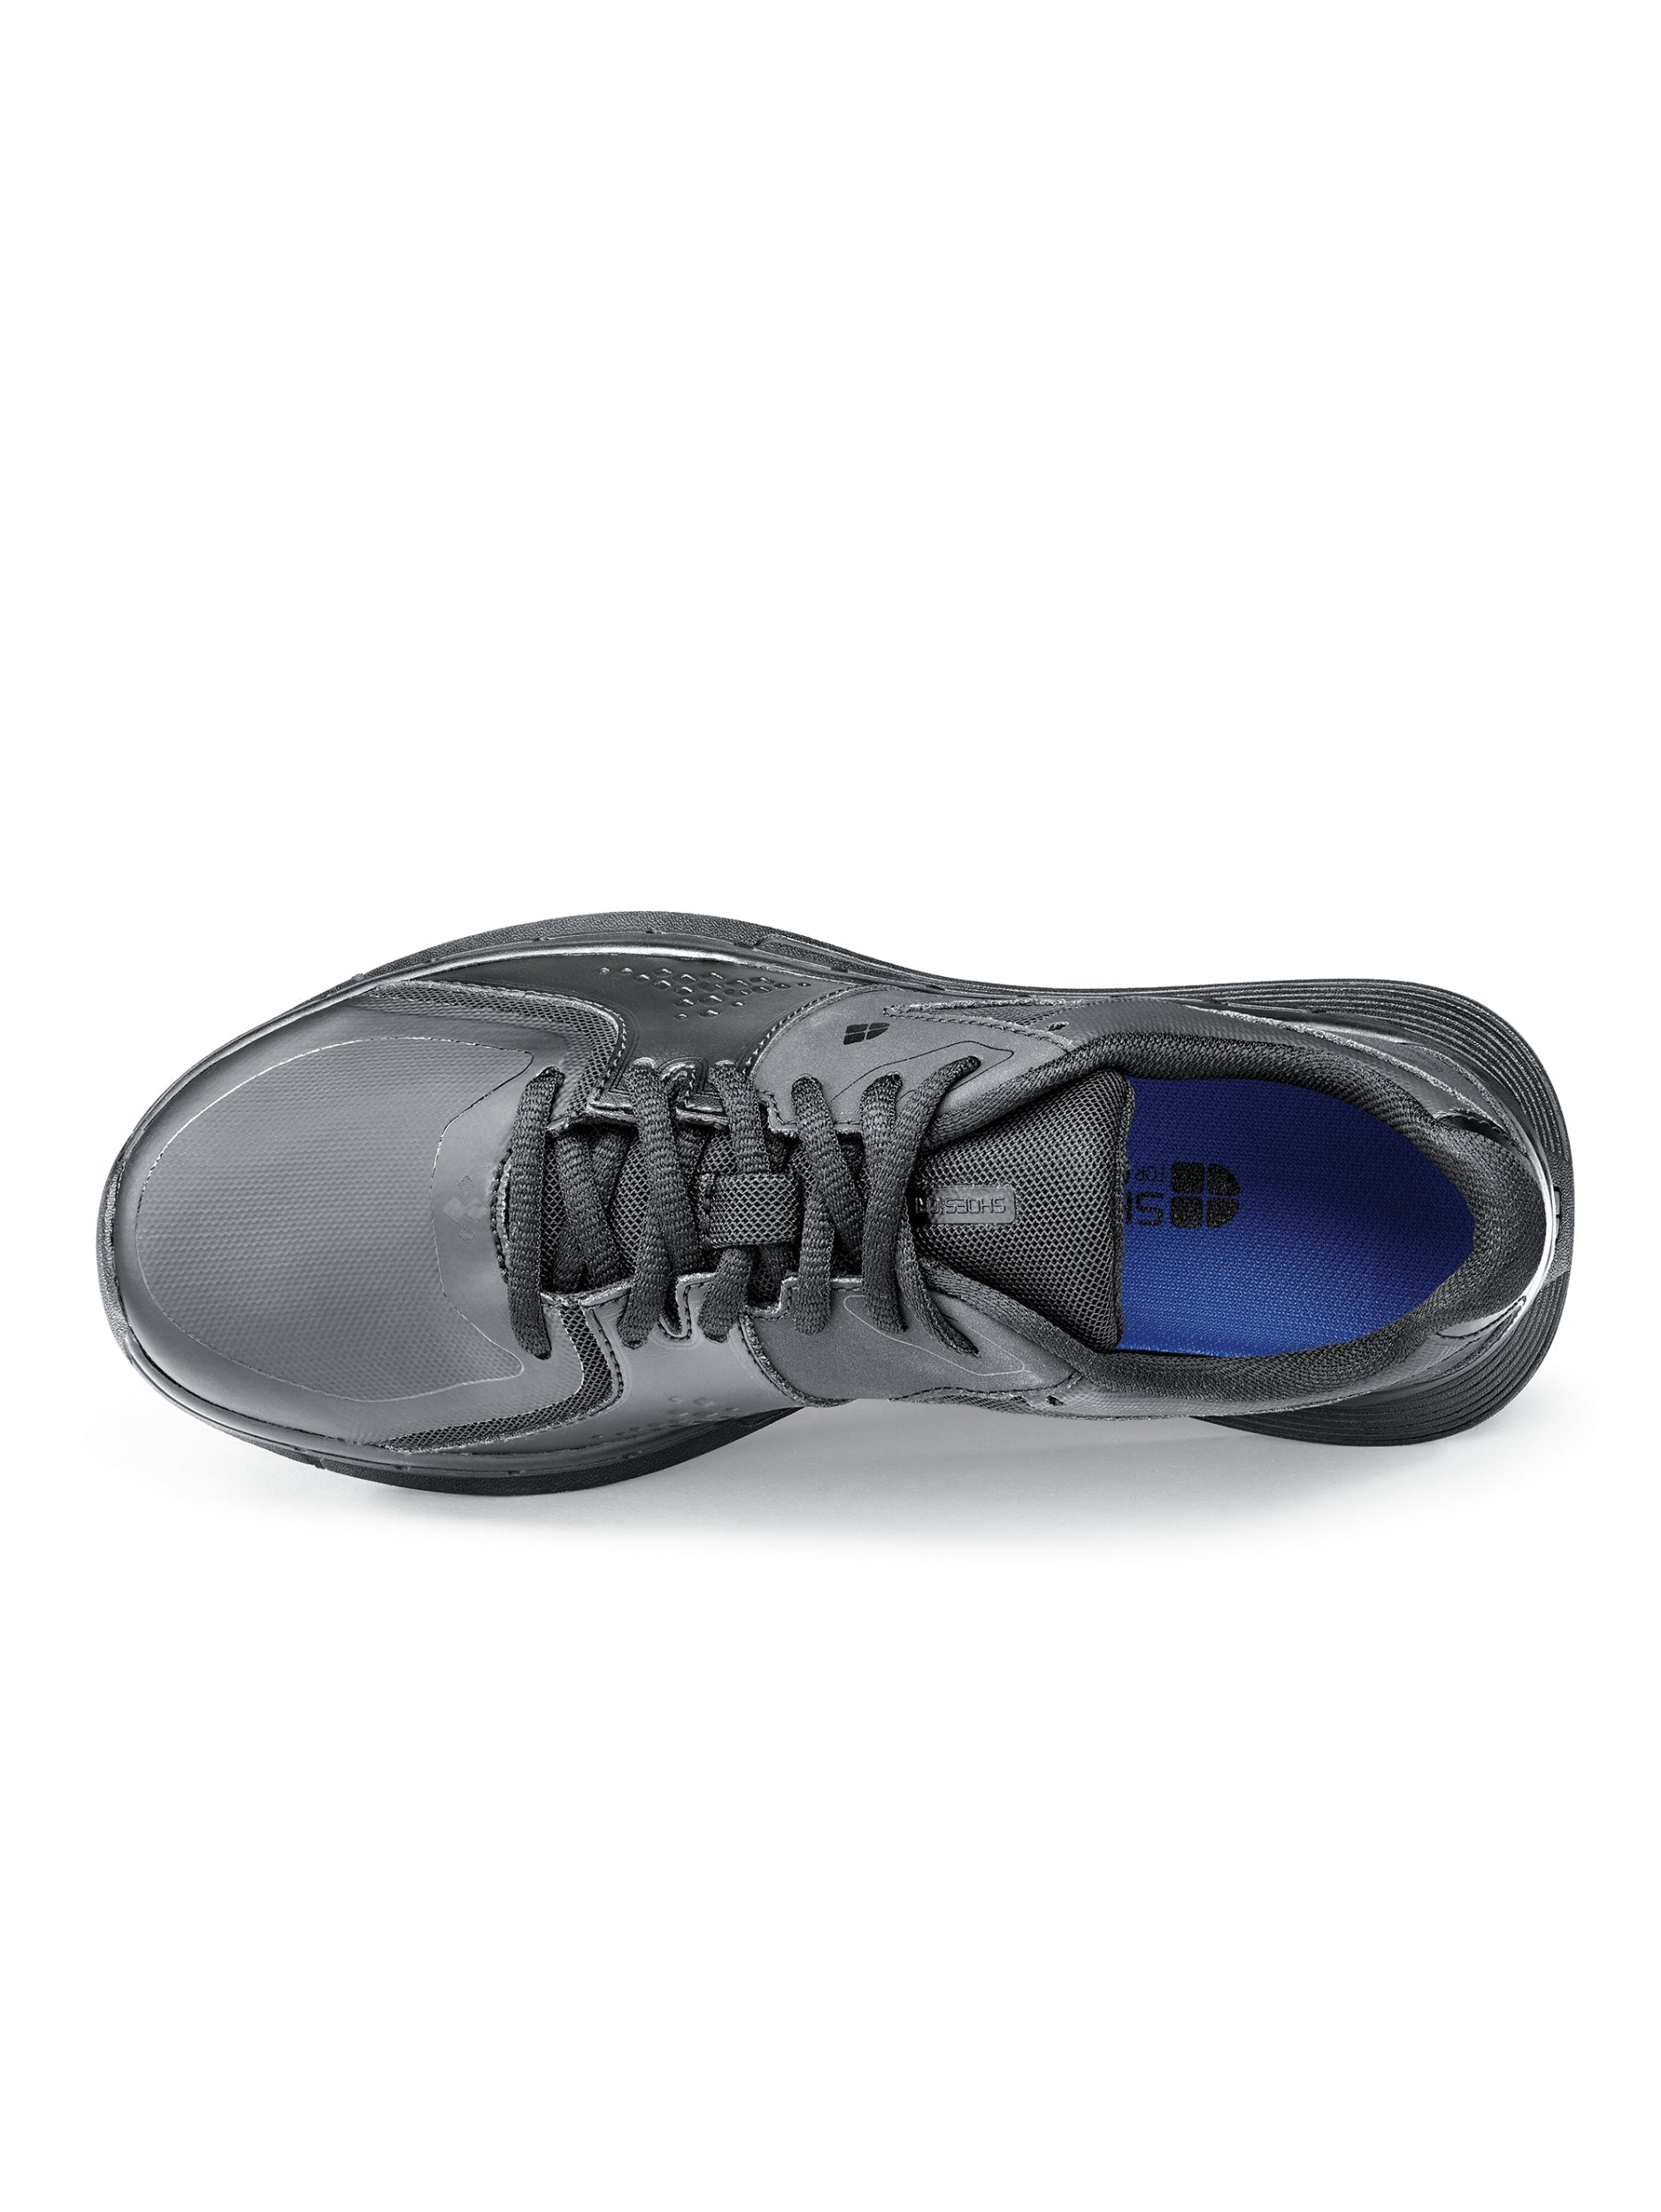 Men's Work Shoe Condor Black by  Shoes For Crews.